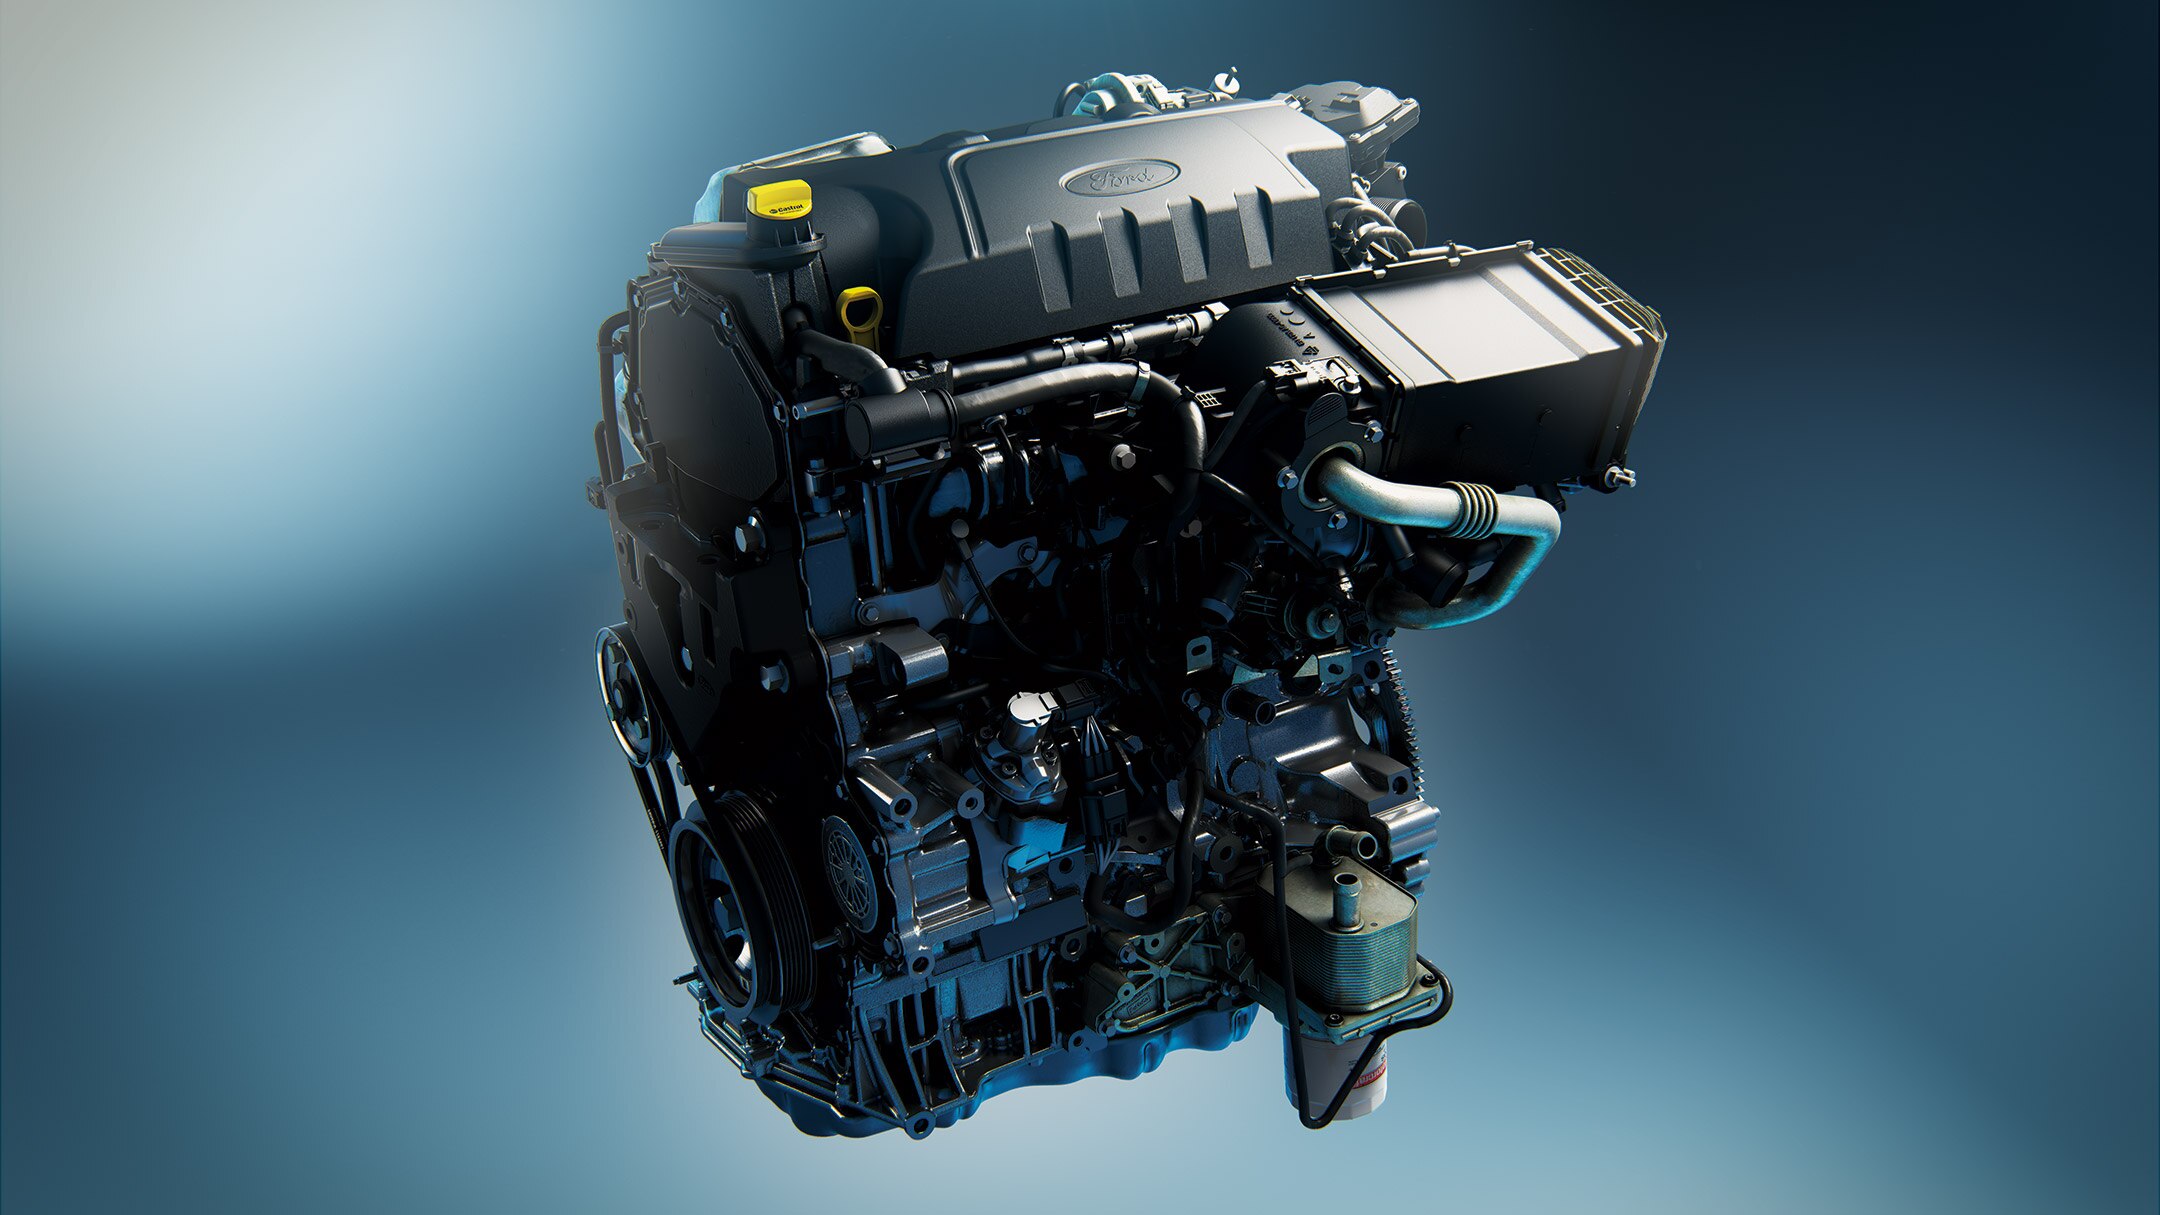 Ford Ranger diesel engine